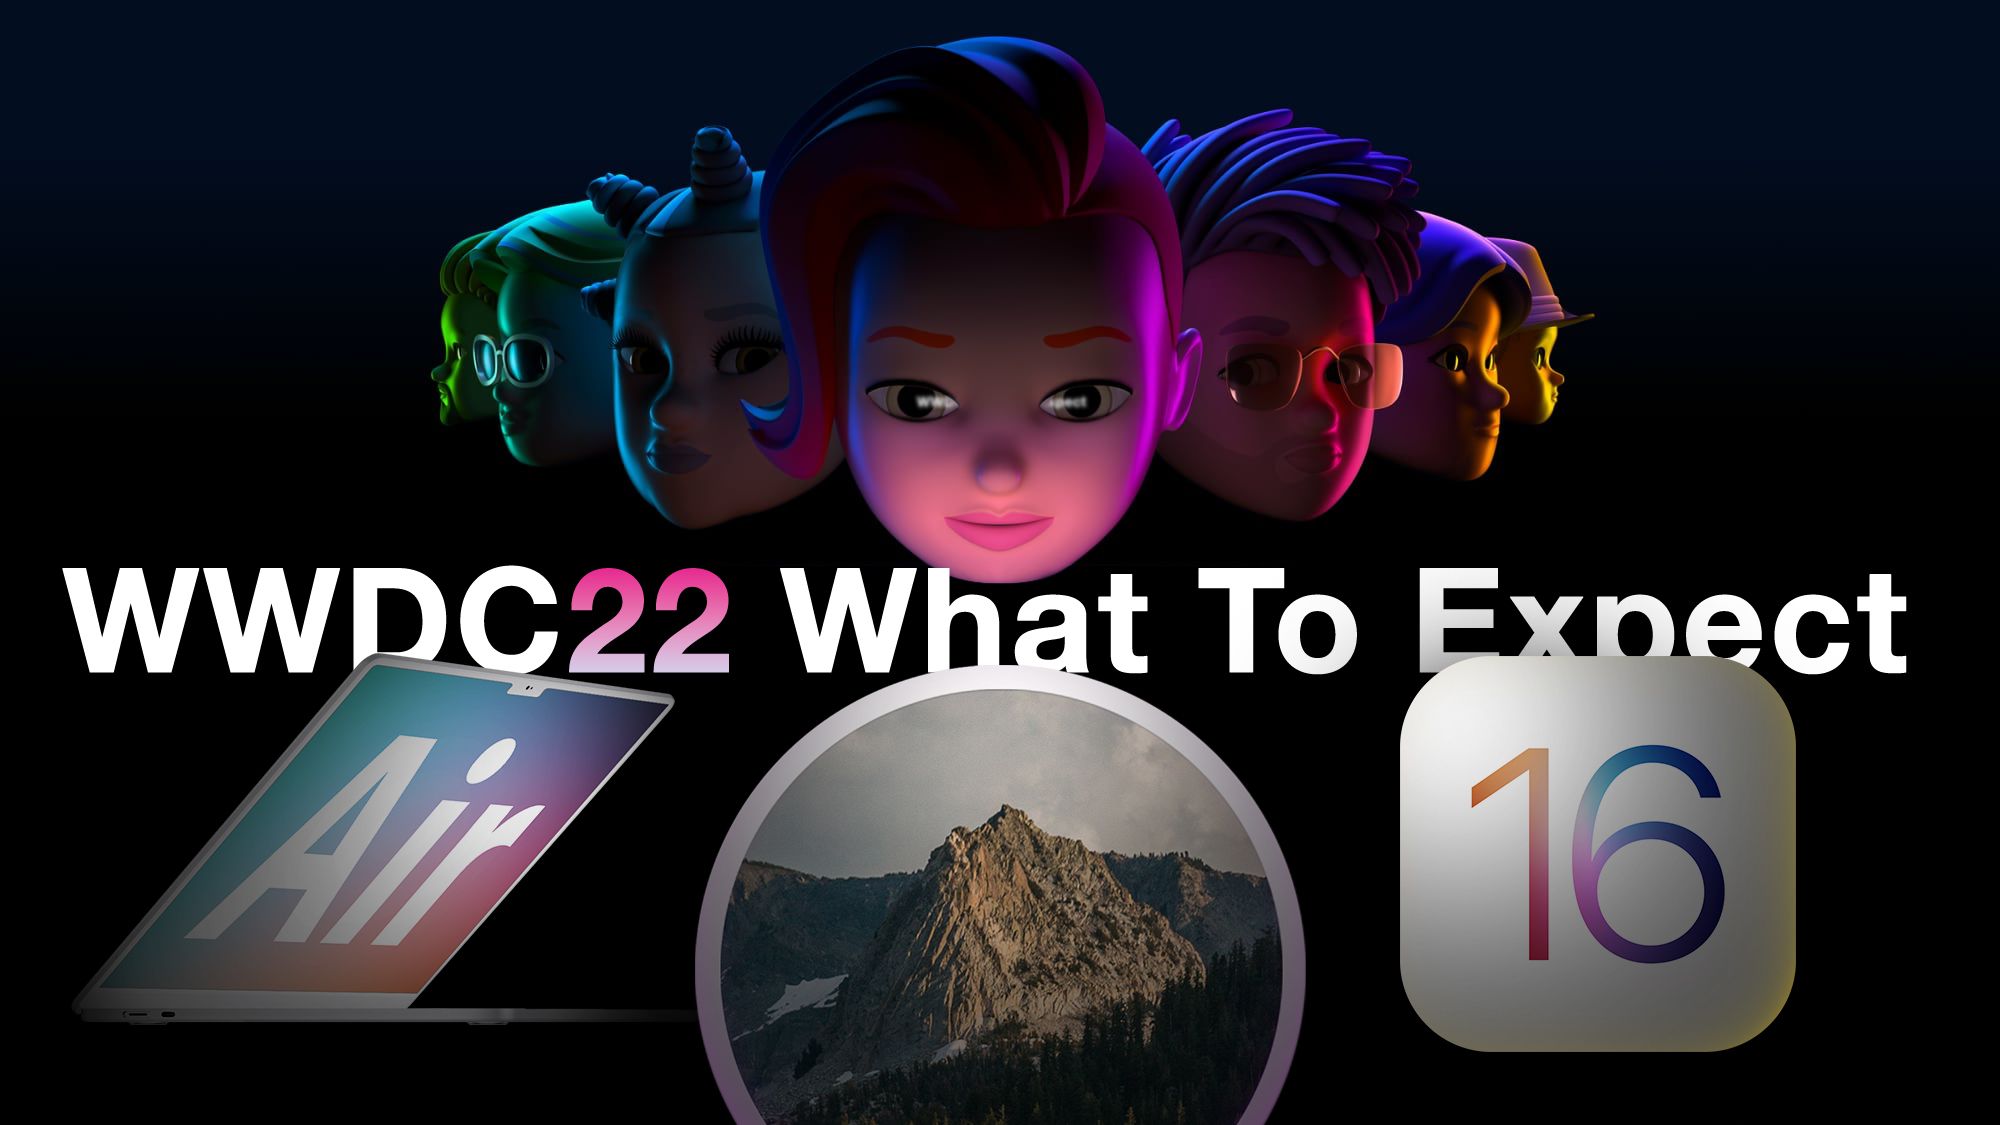 WWDC 2022에서 기대할 수 있는 것: iOS 16, macOS 13, watchOS 9 및 아마도 새로운 Mac